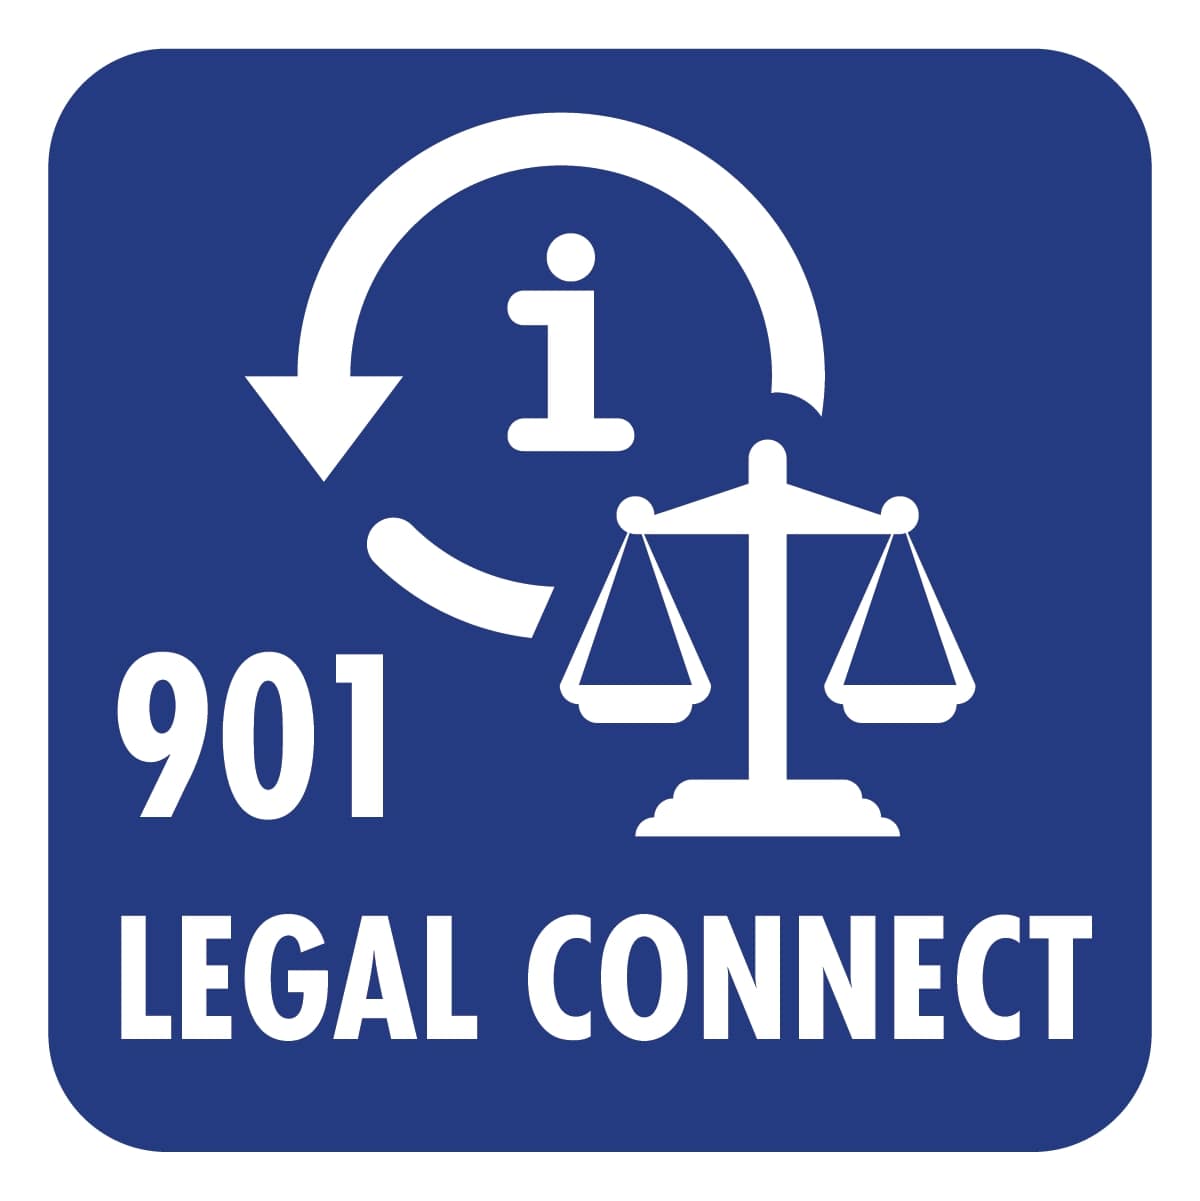 901 Legal Connect